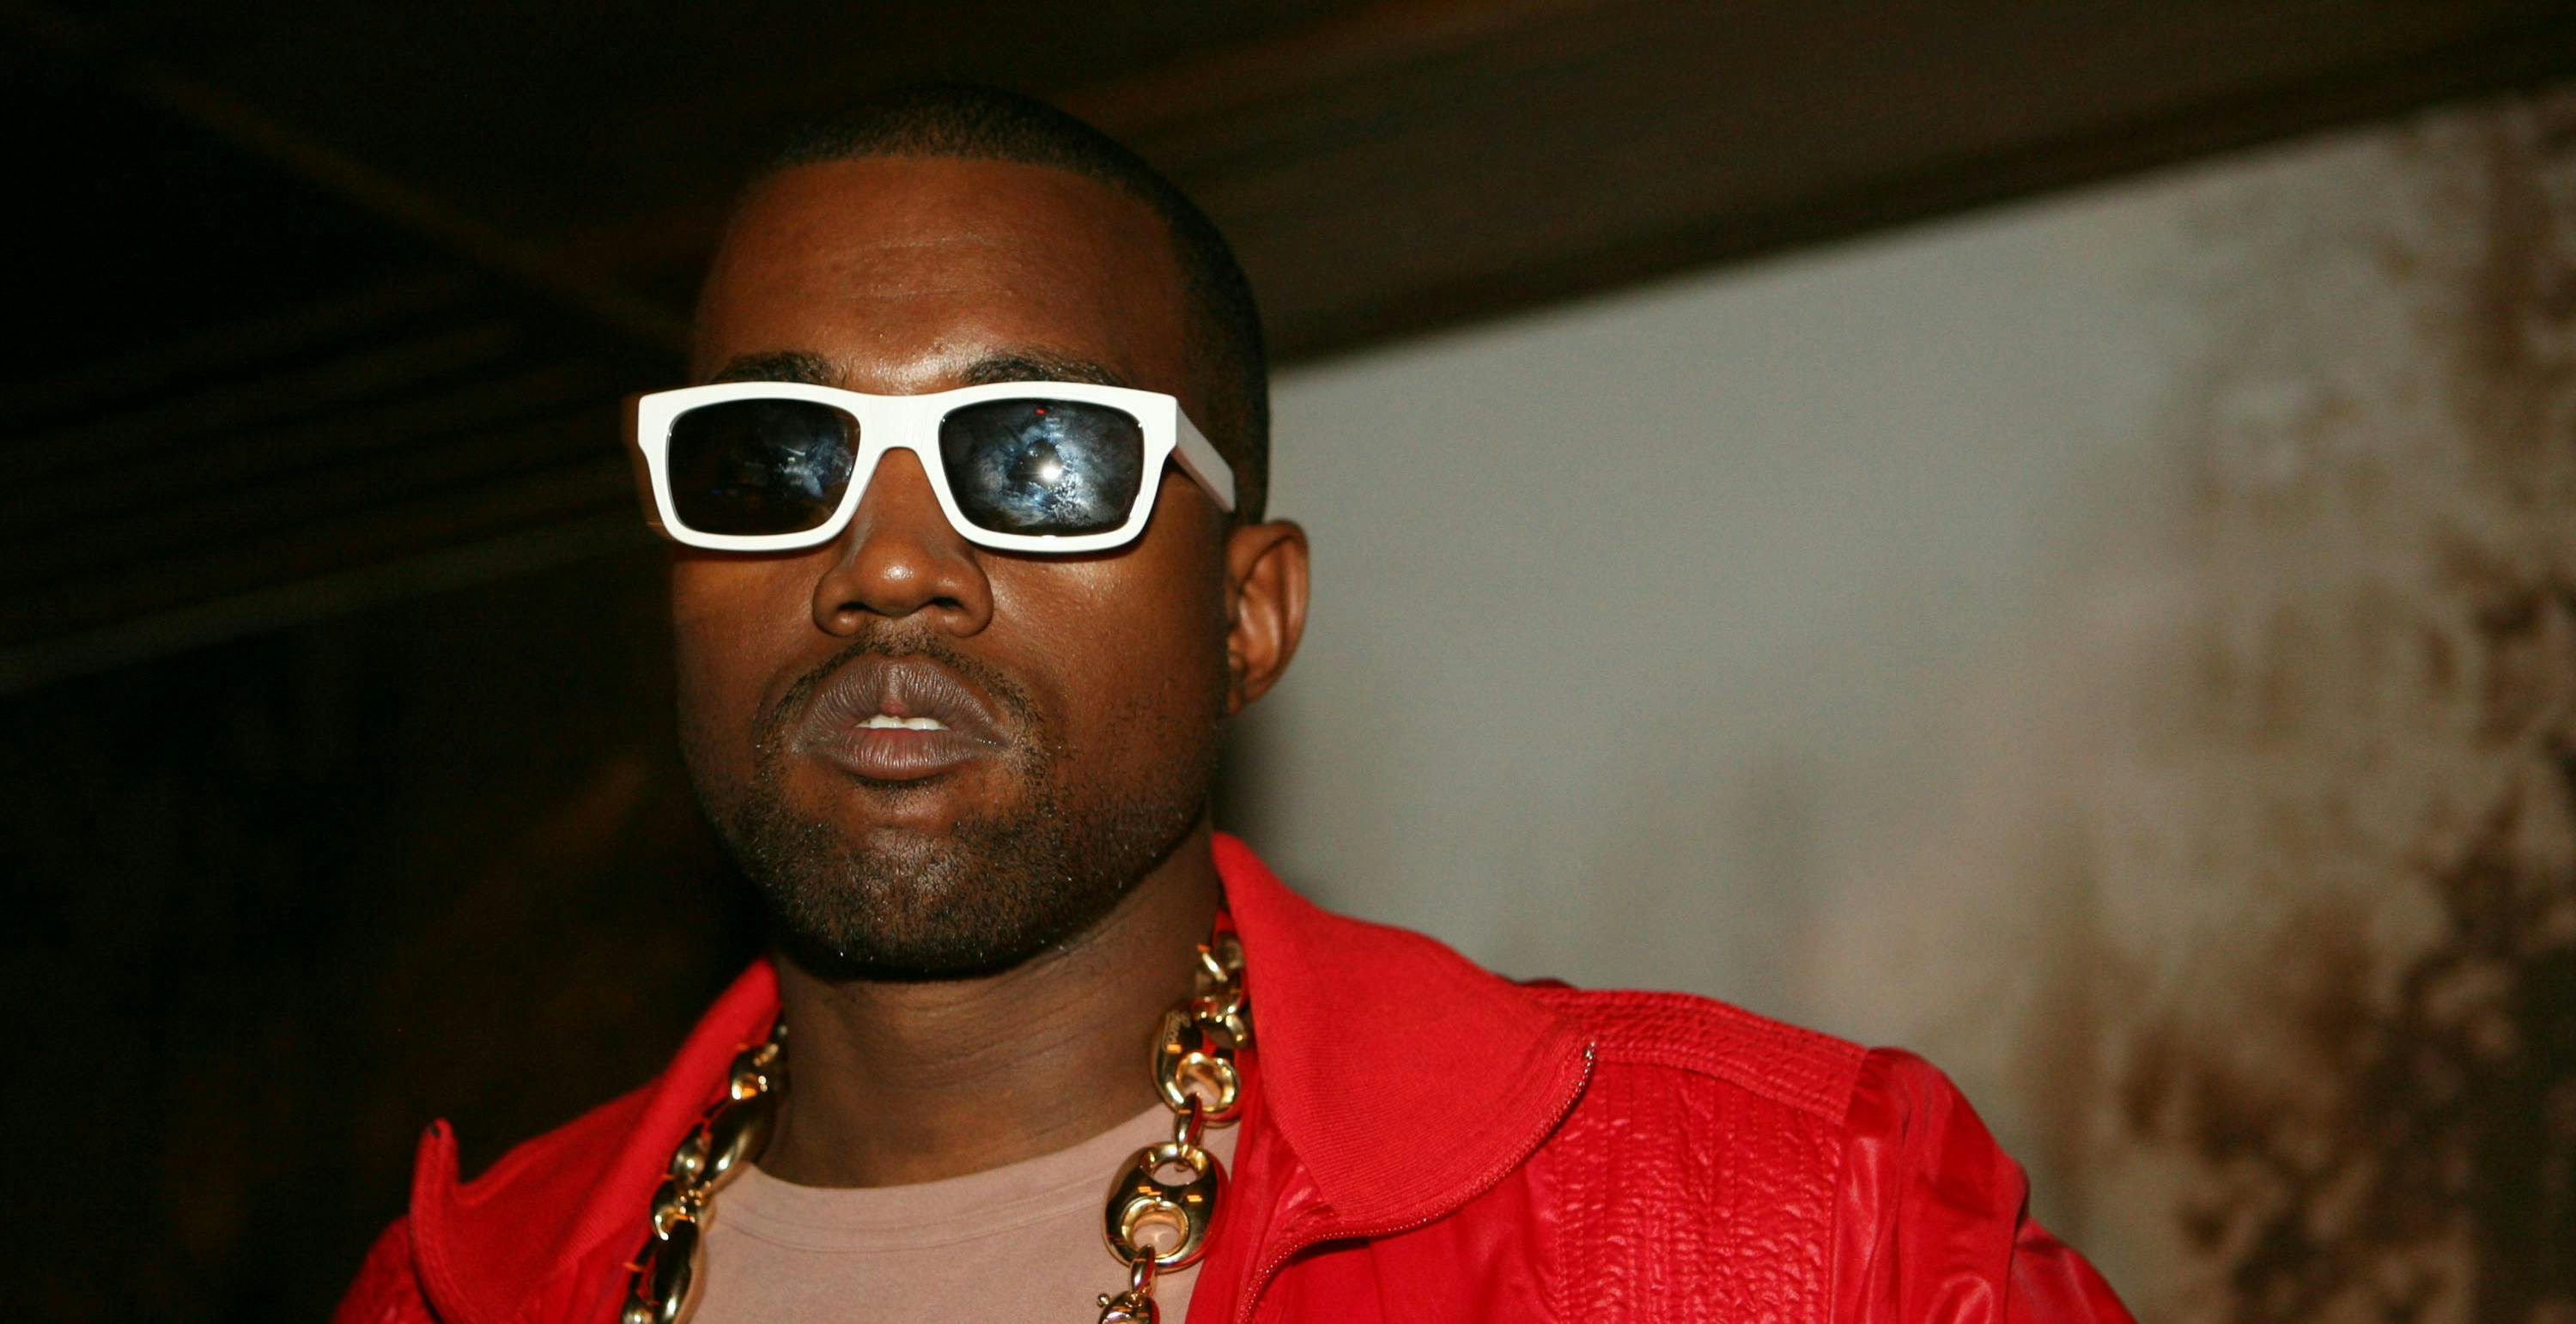 sunglasses accessories person man adult male portrait face head jacket